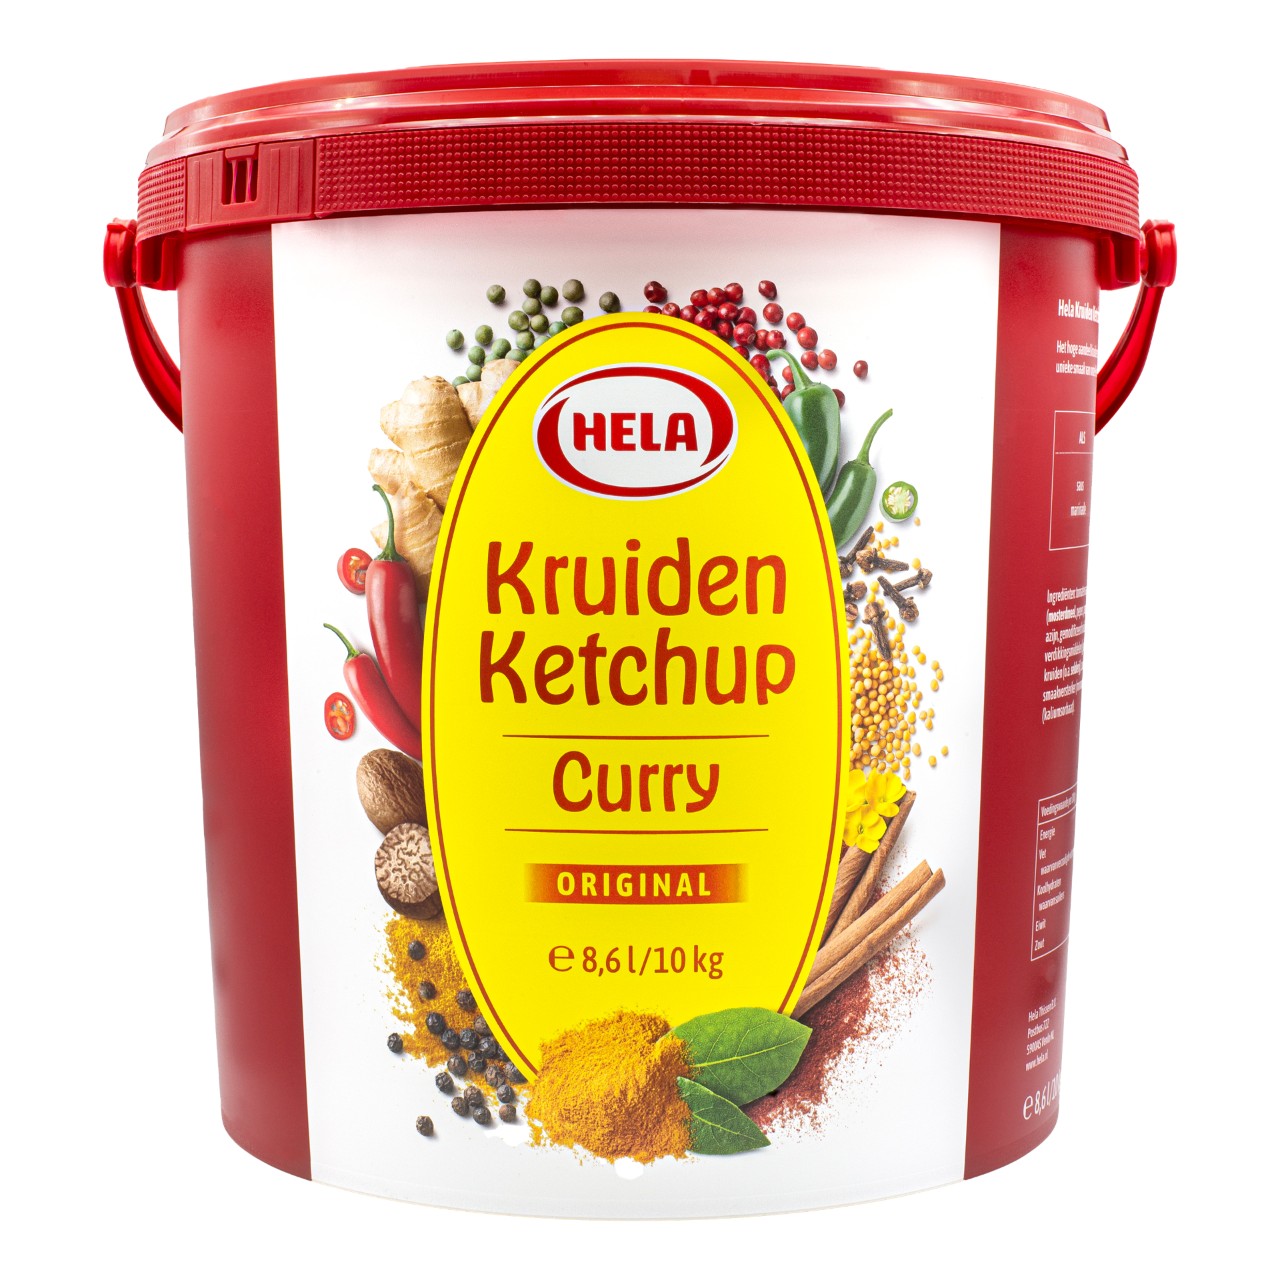 Curry kruiden ketchup original